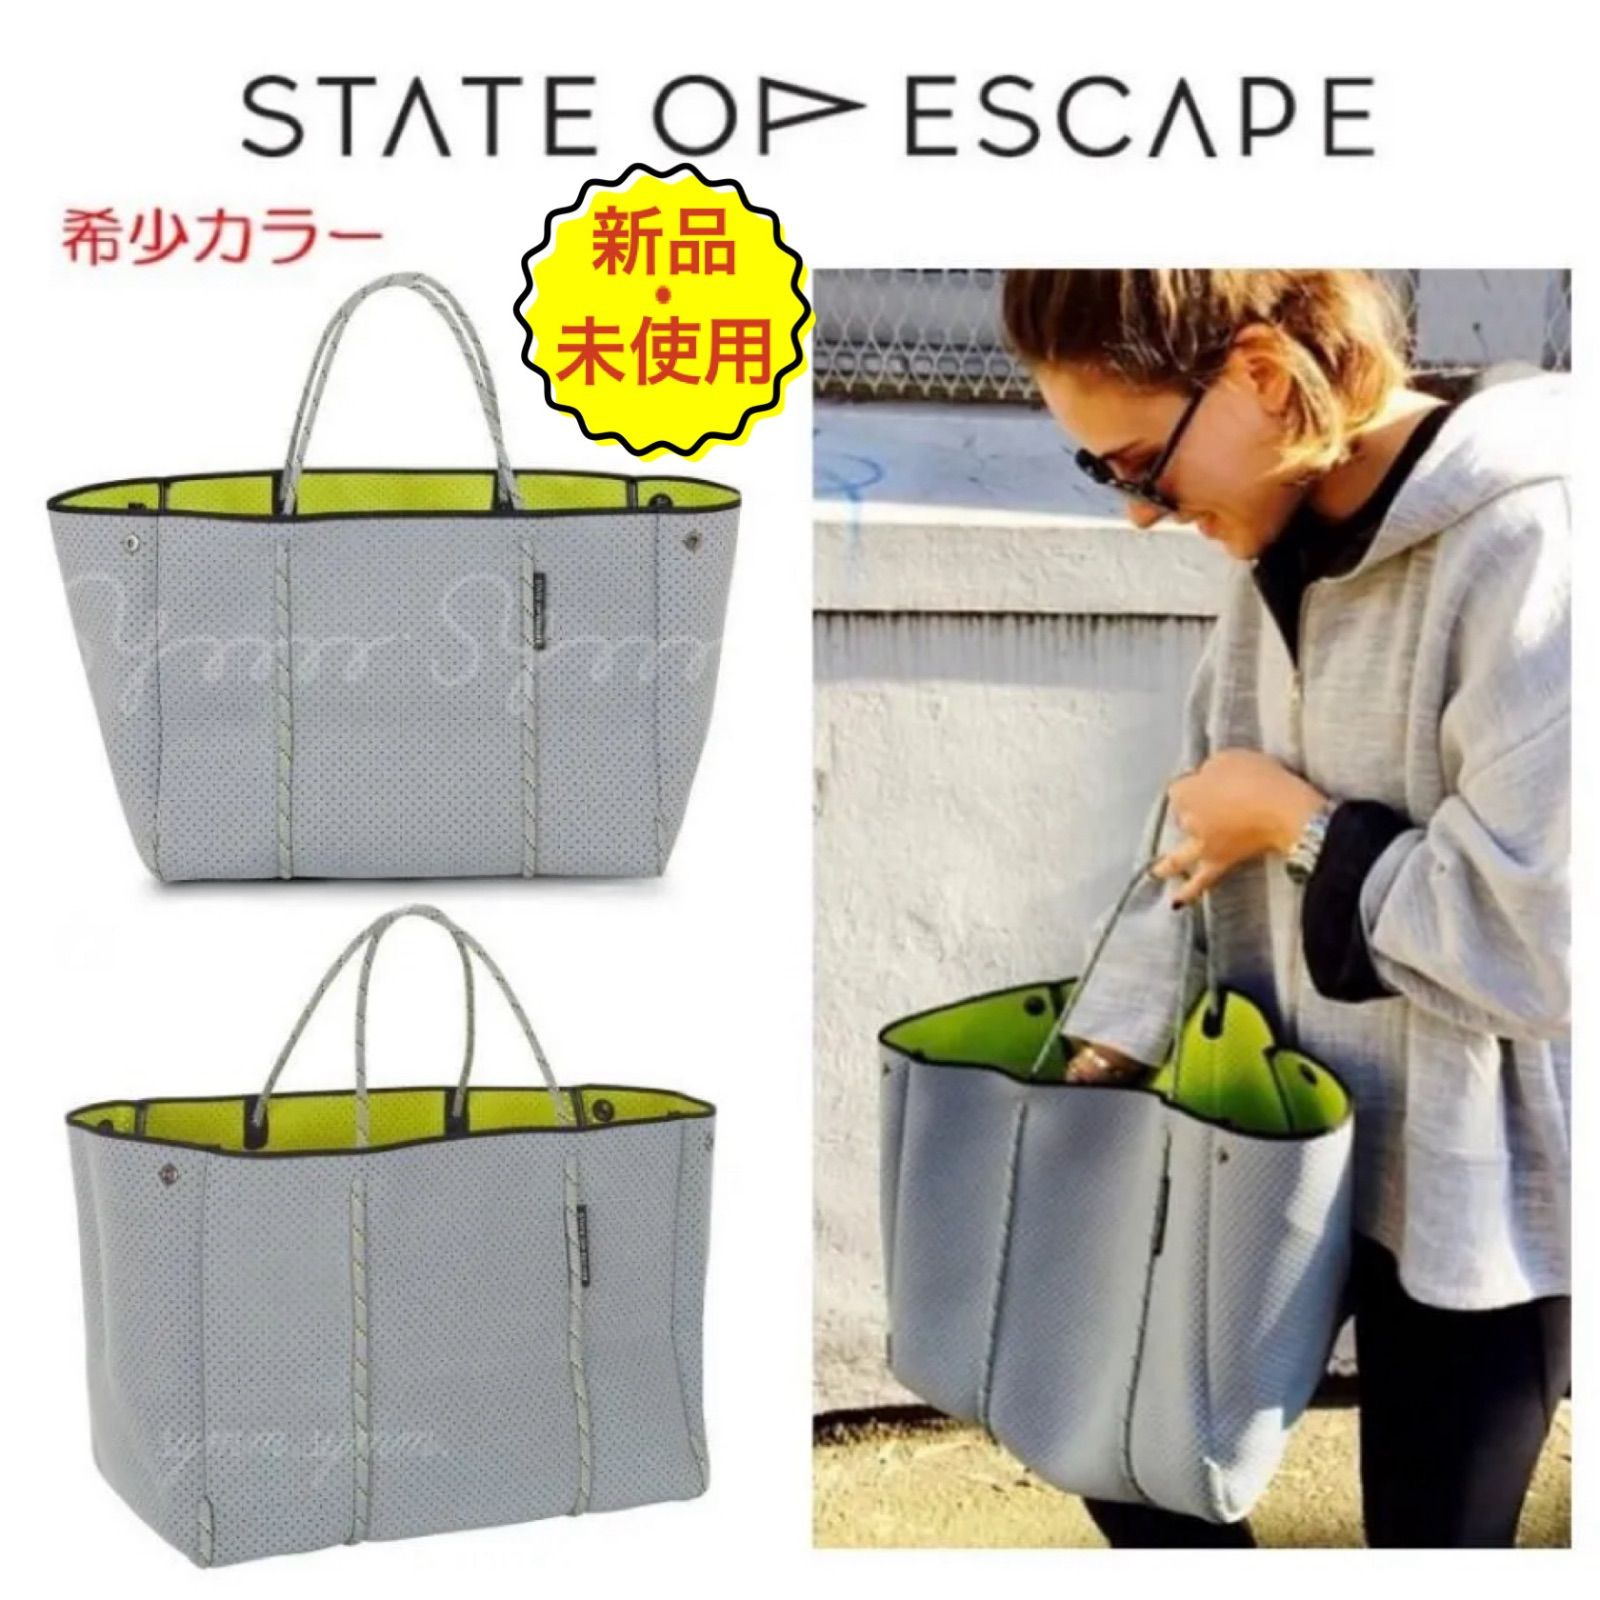 State of escape 中サイズ グレー×ネオンイエロー - www.sorbillomenu.com